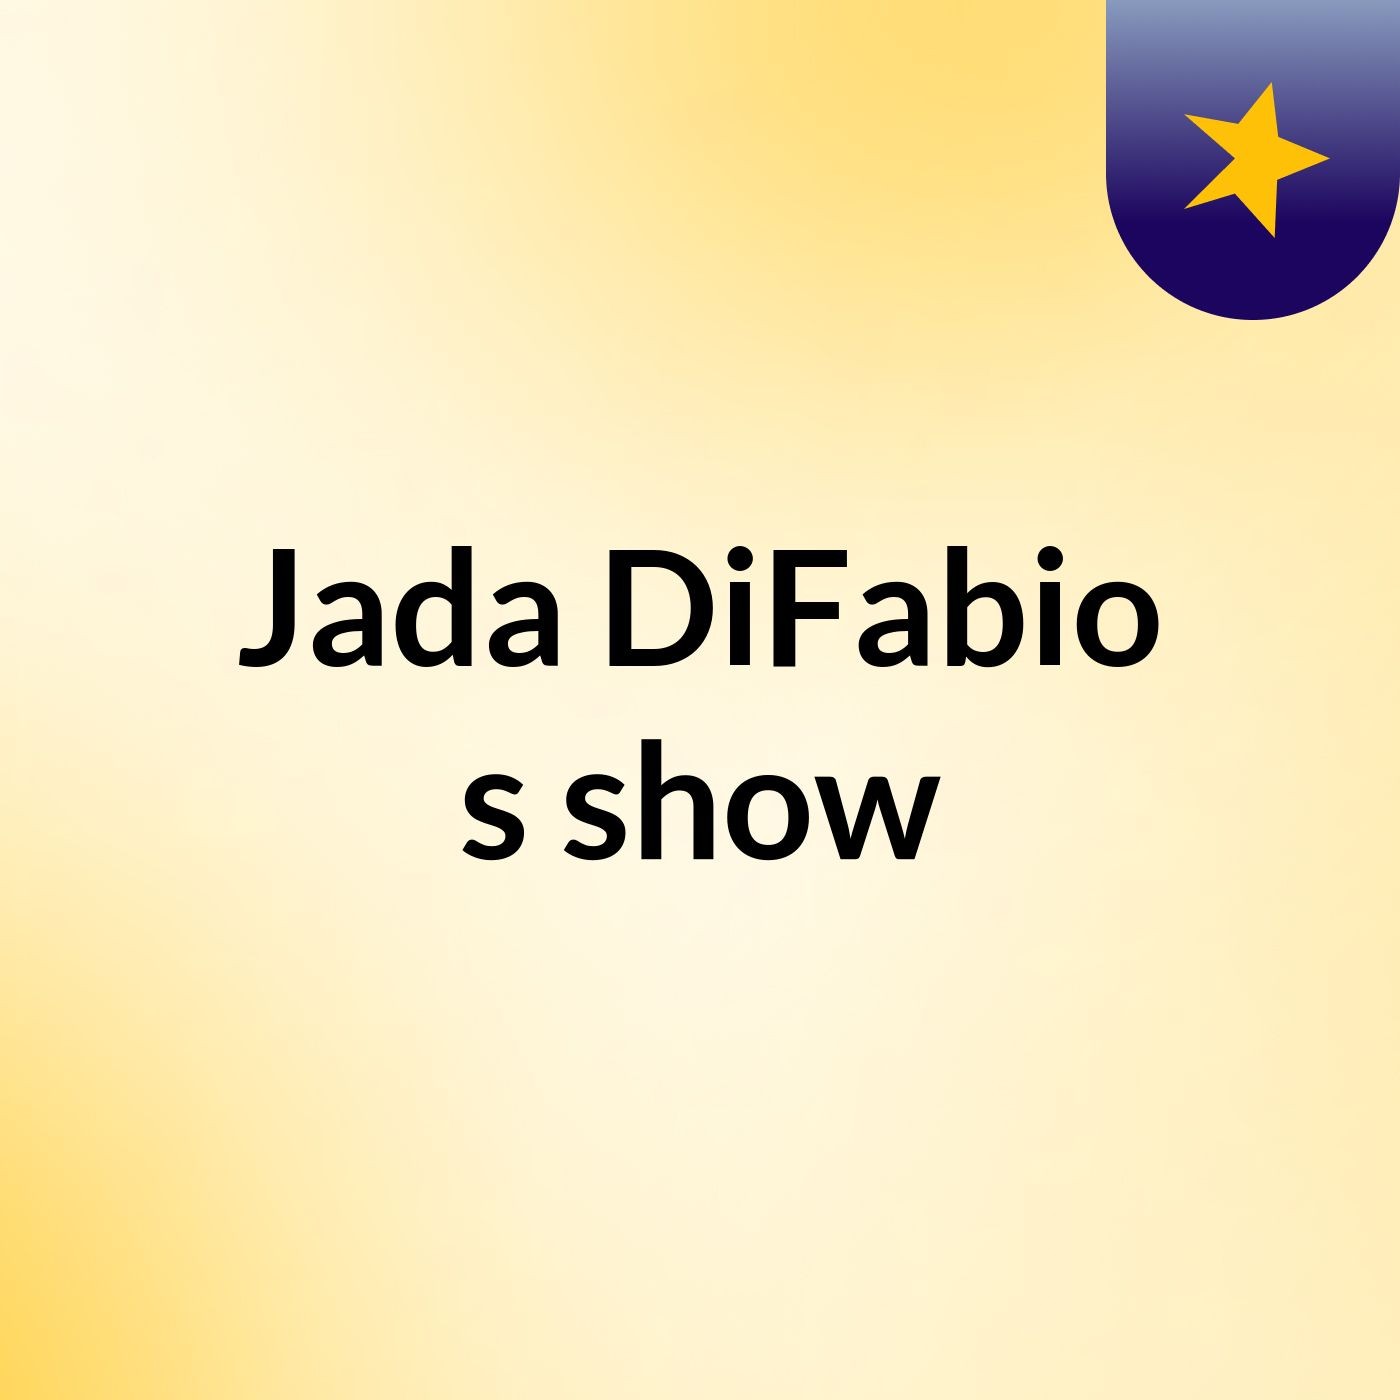 Episode 7 - Jada DiFabio's show